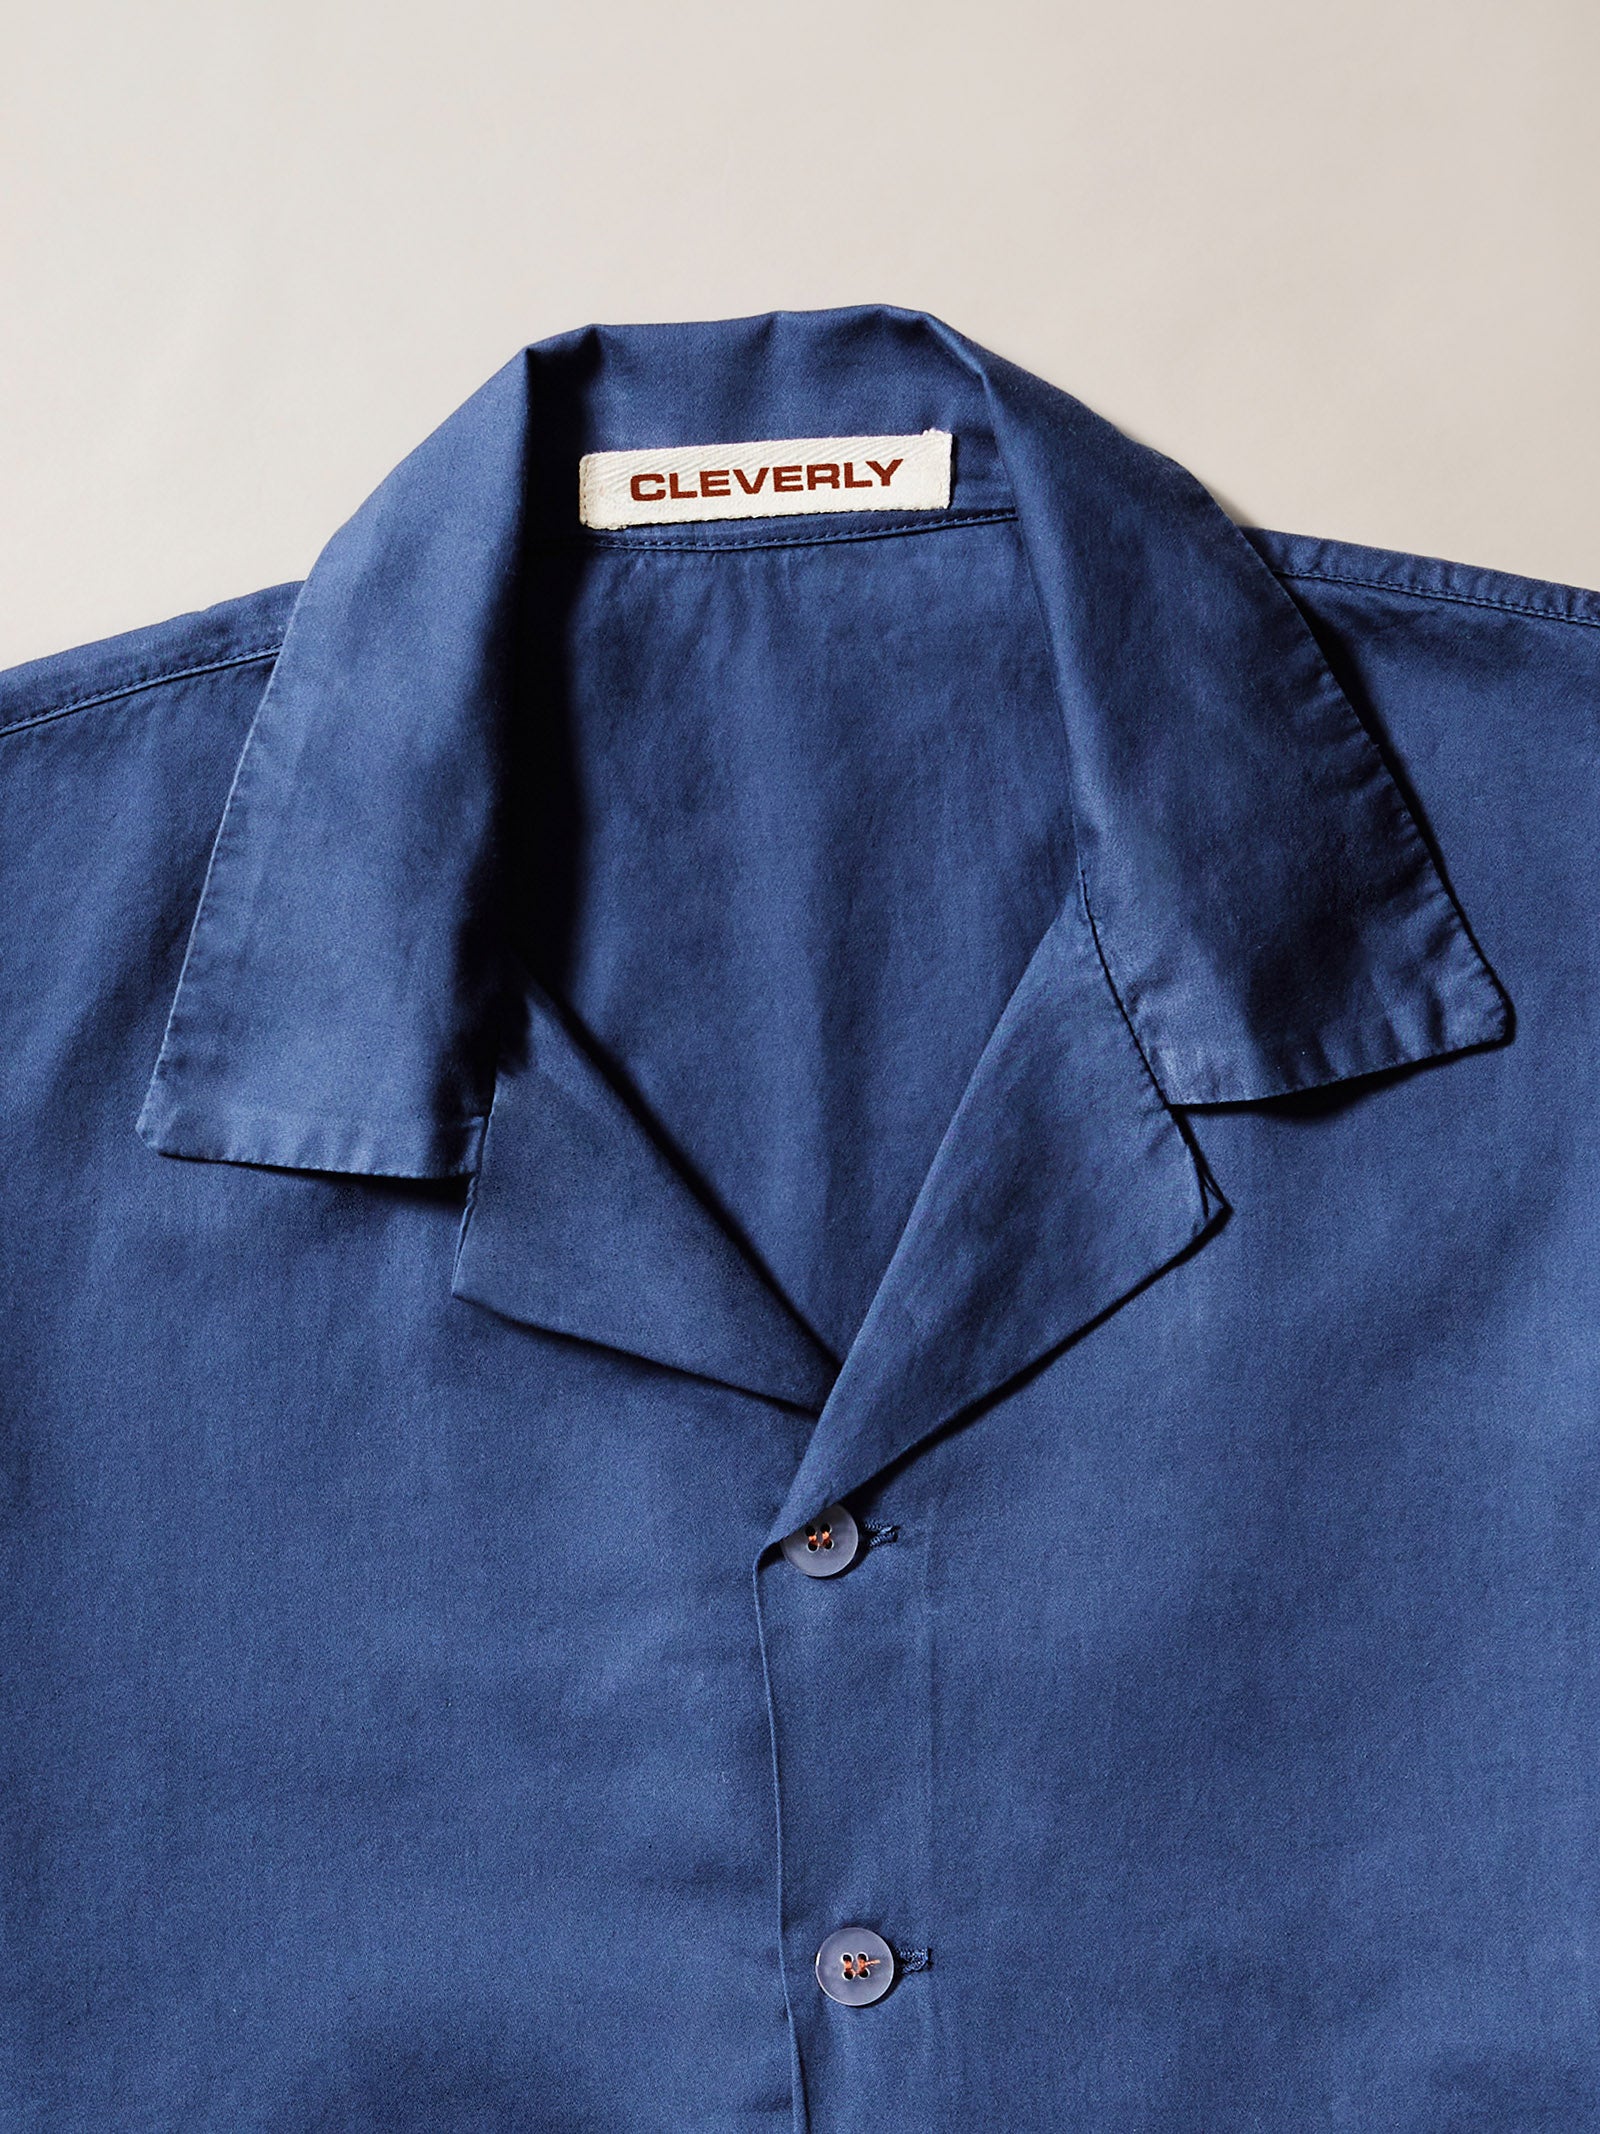 Navy Blue Shirt - Short-sleeved